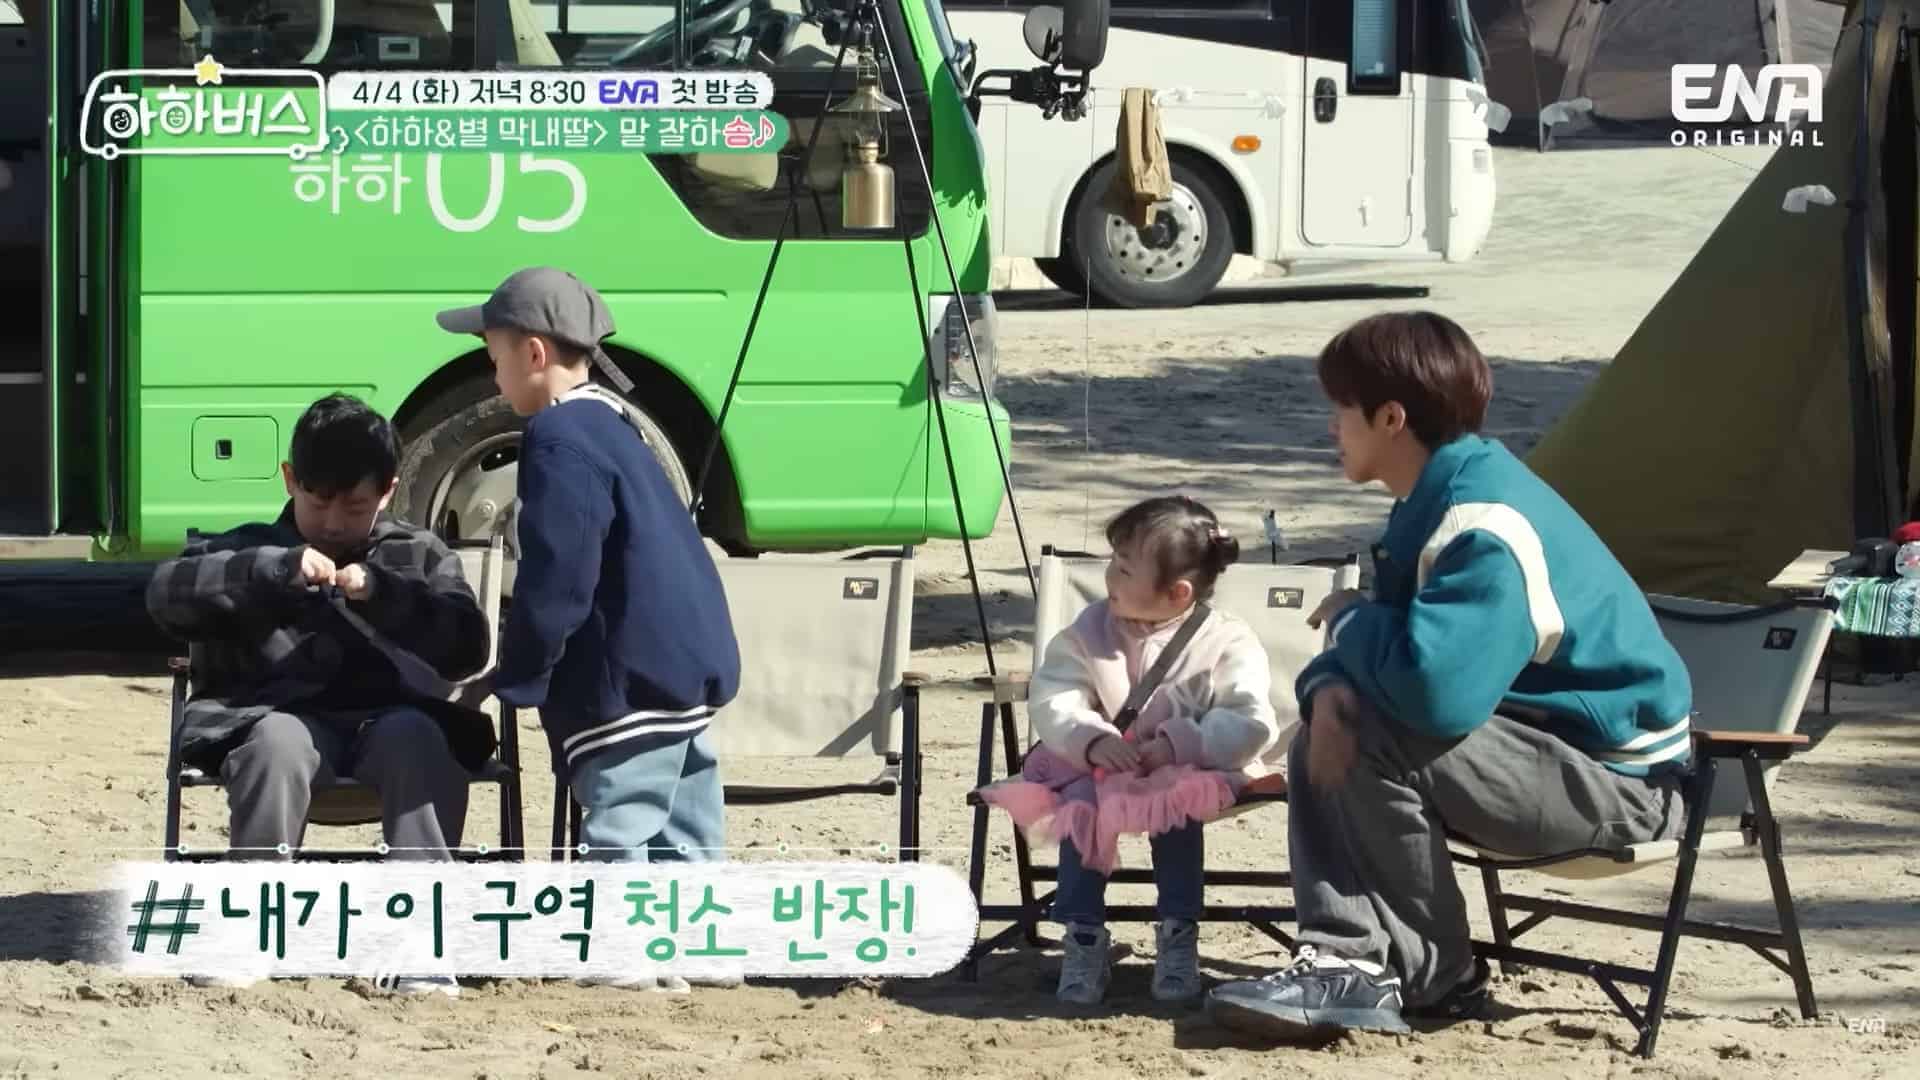 Ha Ha Bus Episode 5 preview